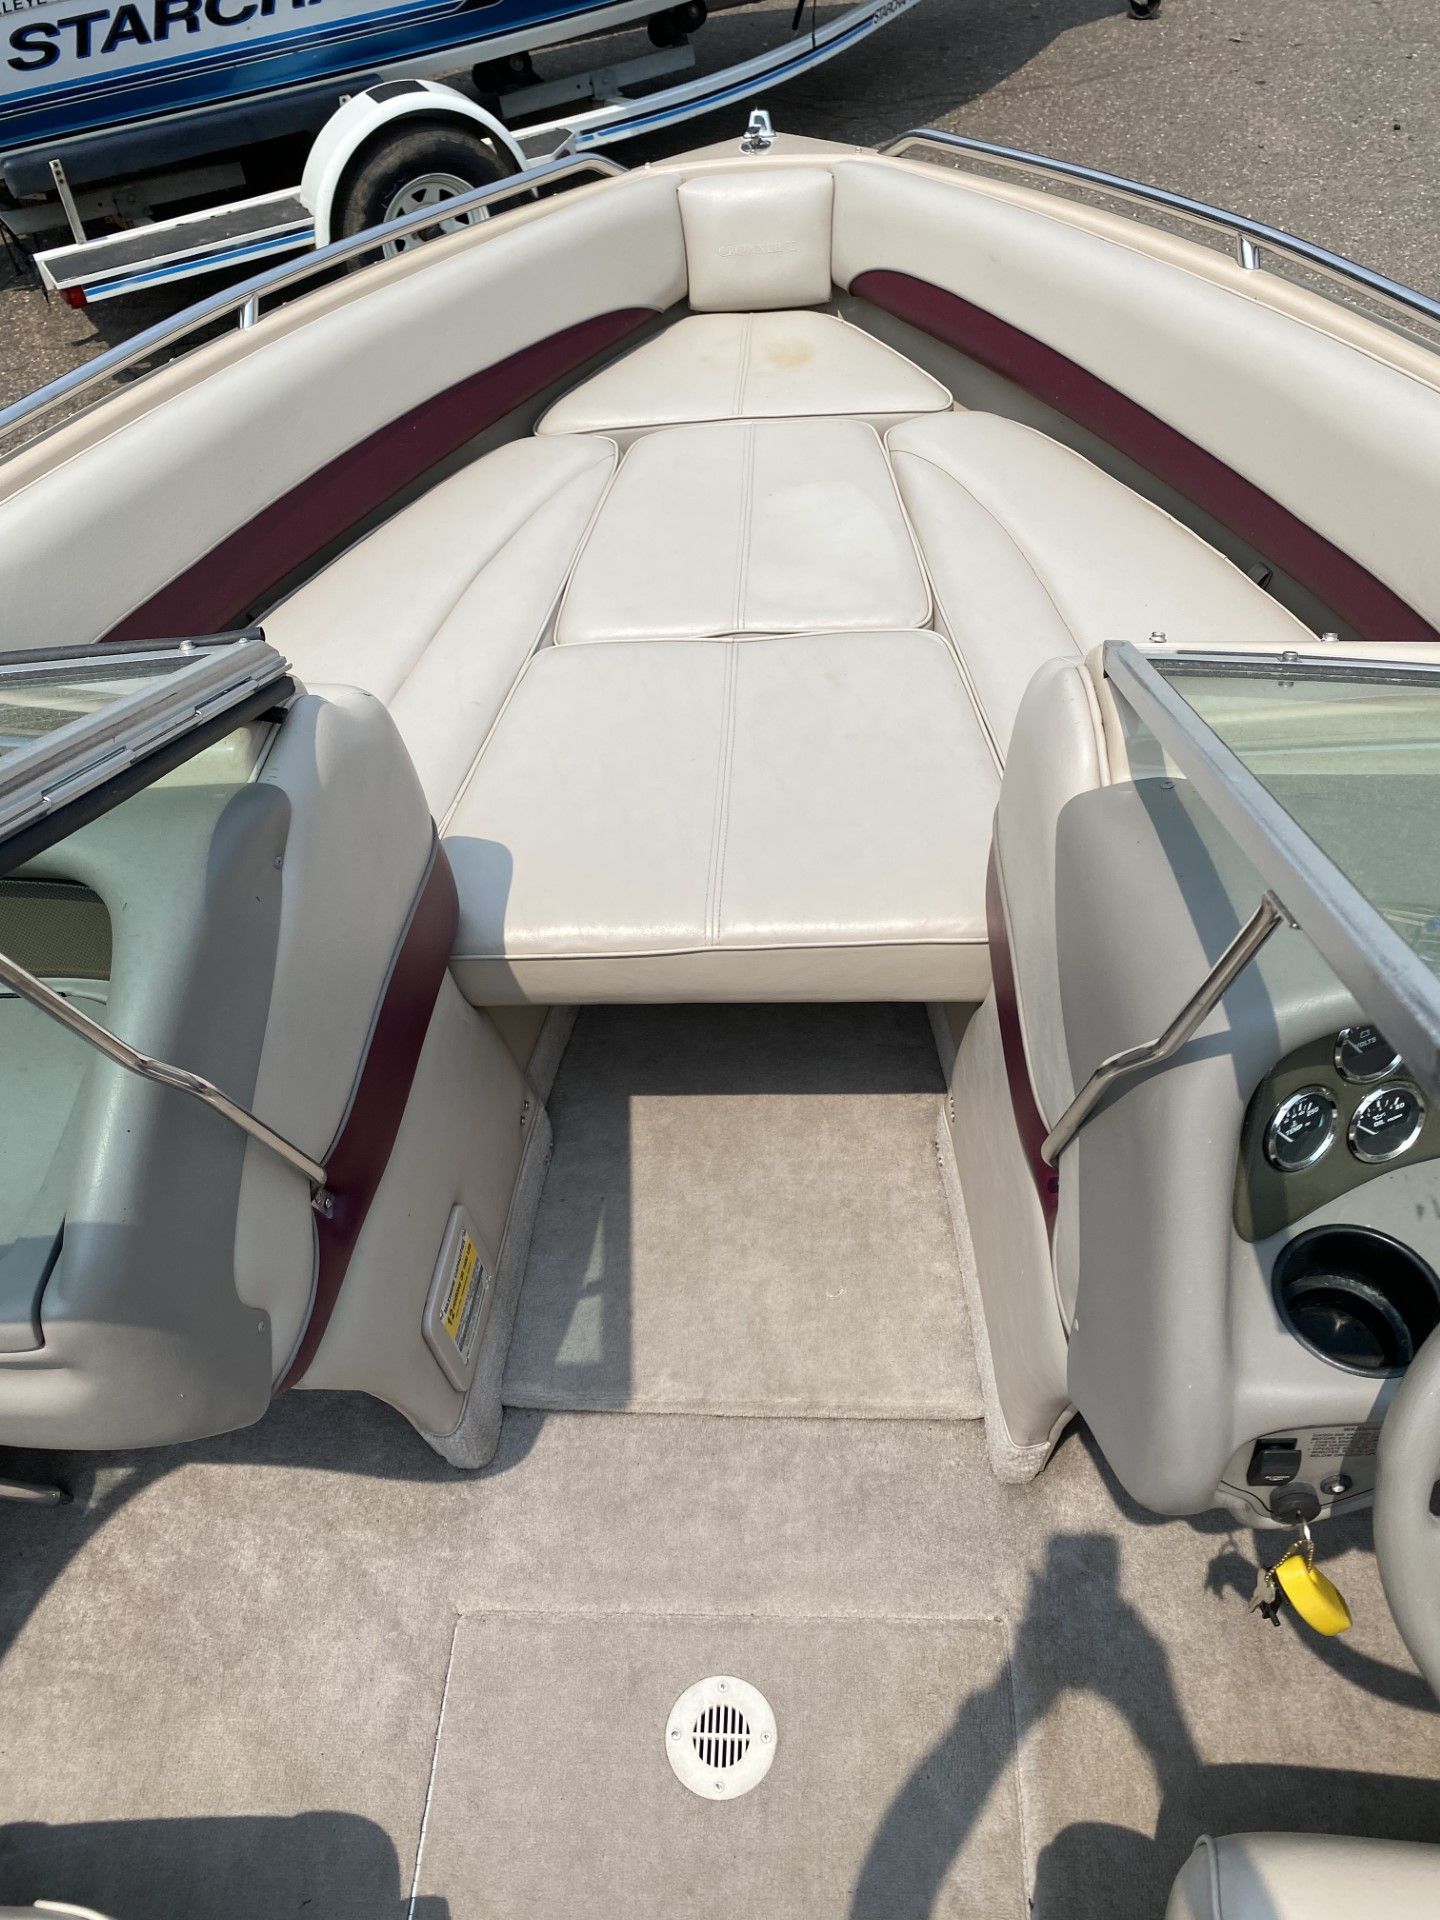 1999 Crownline 202 boat interior accessory